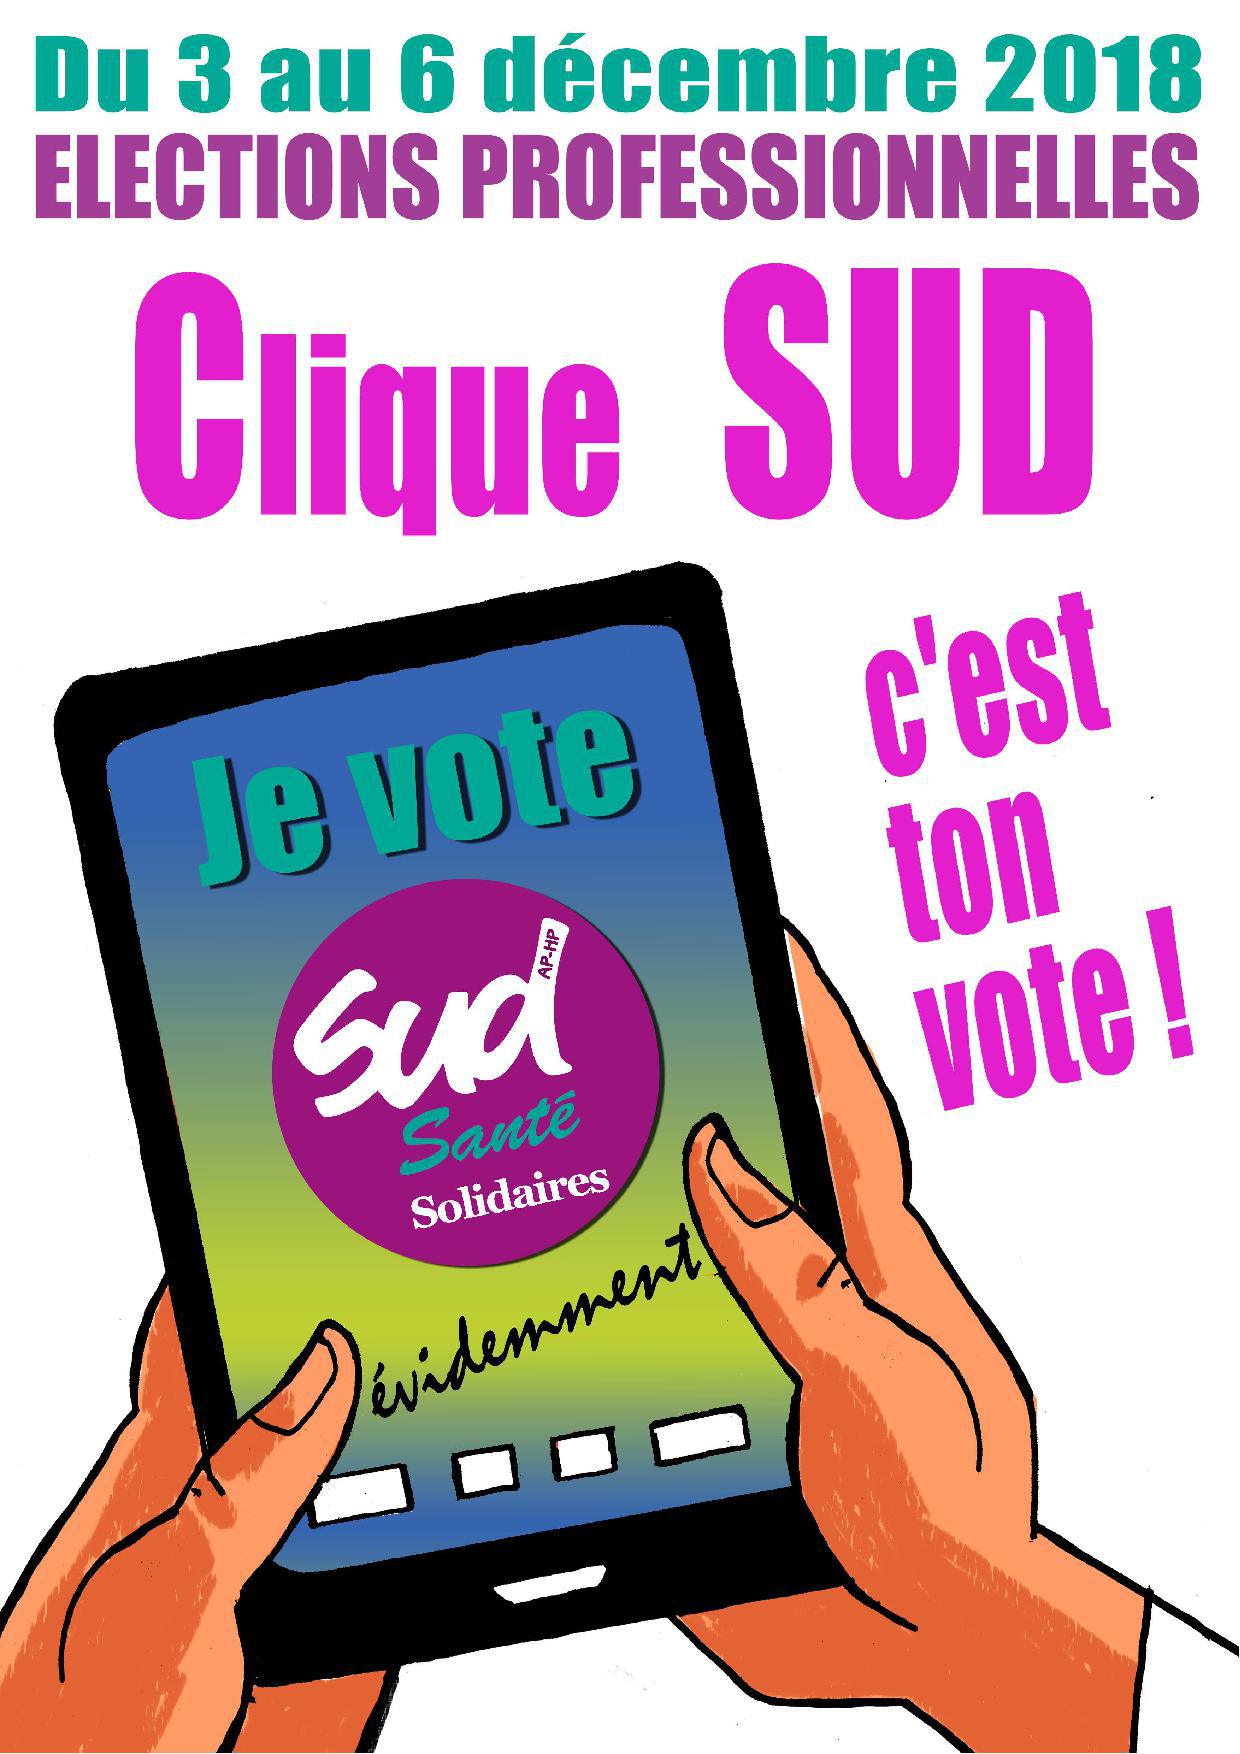 Clique ton vote telephone.psd